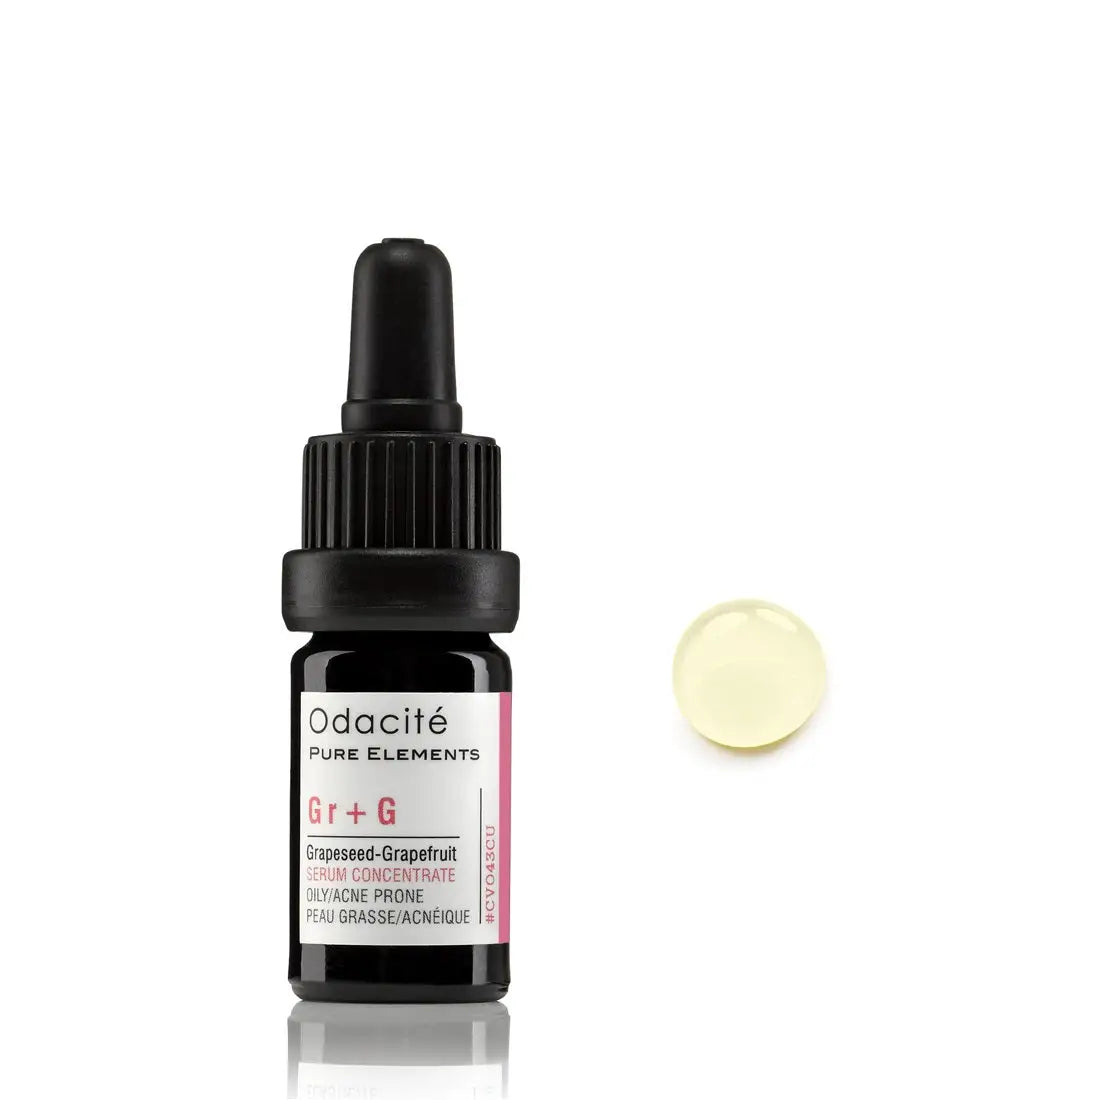 Odacite Gr+G Oily-Acnee Prone Skin Serum 5ml - Free Shipping